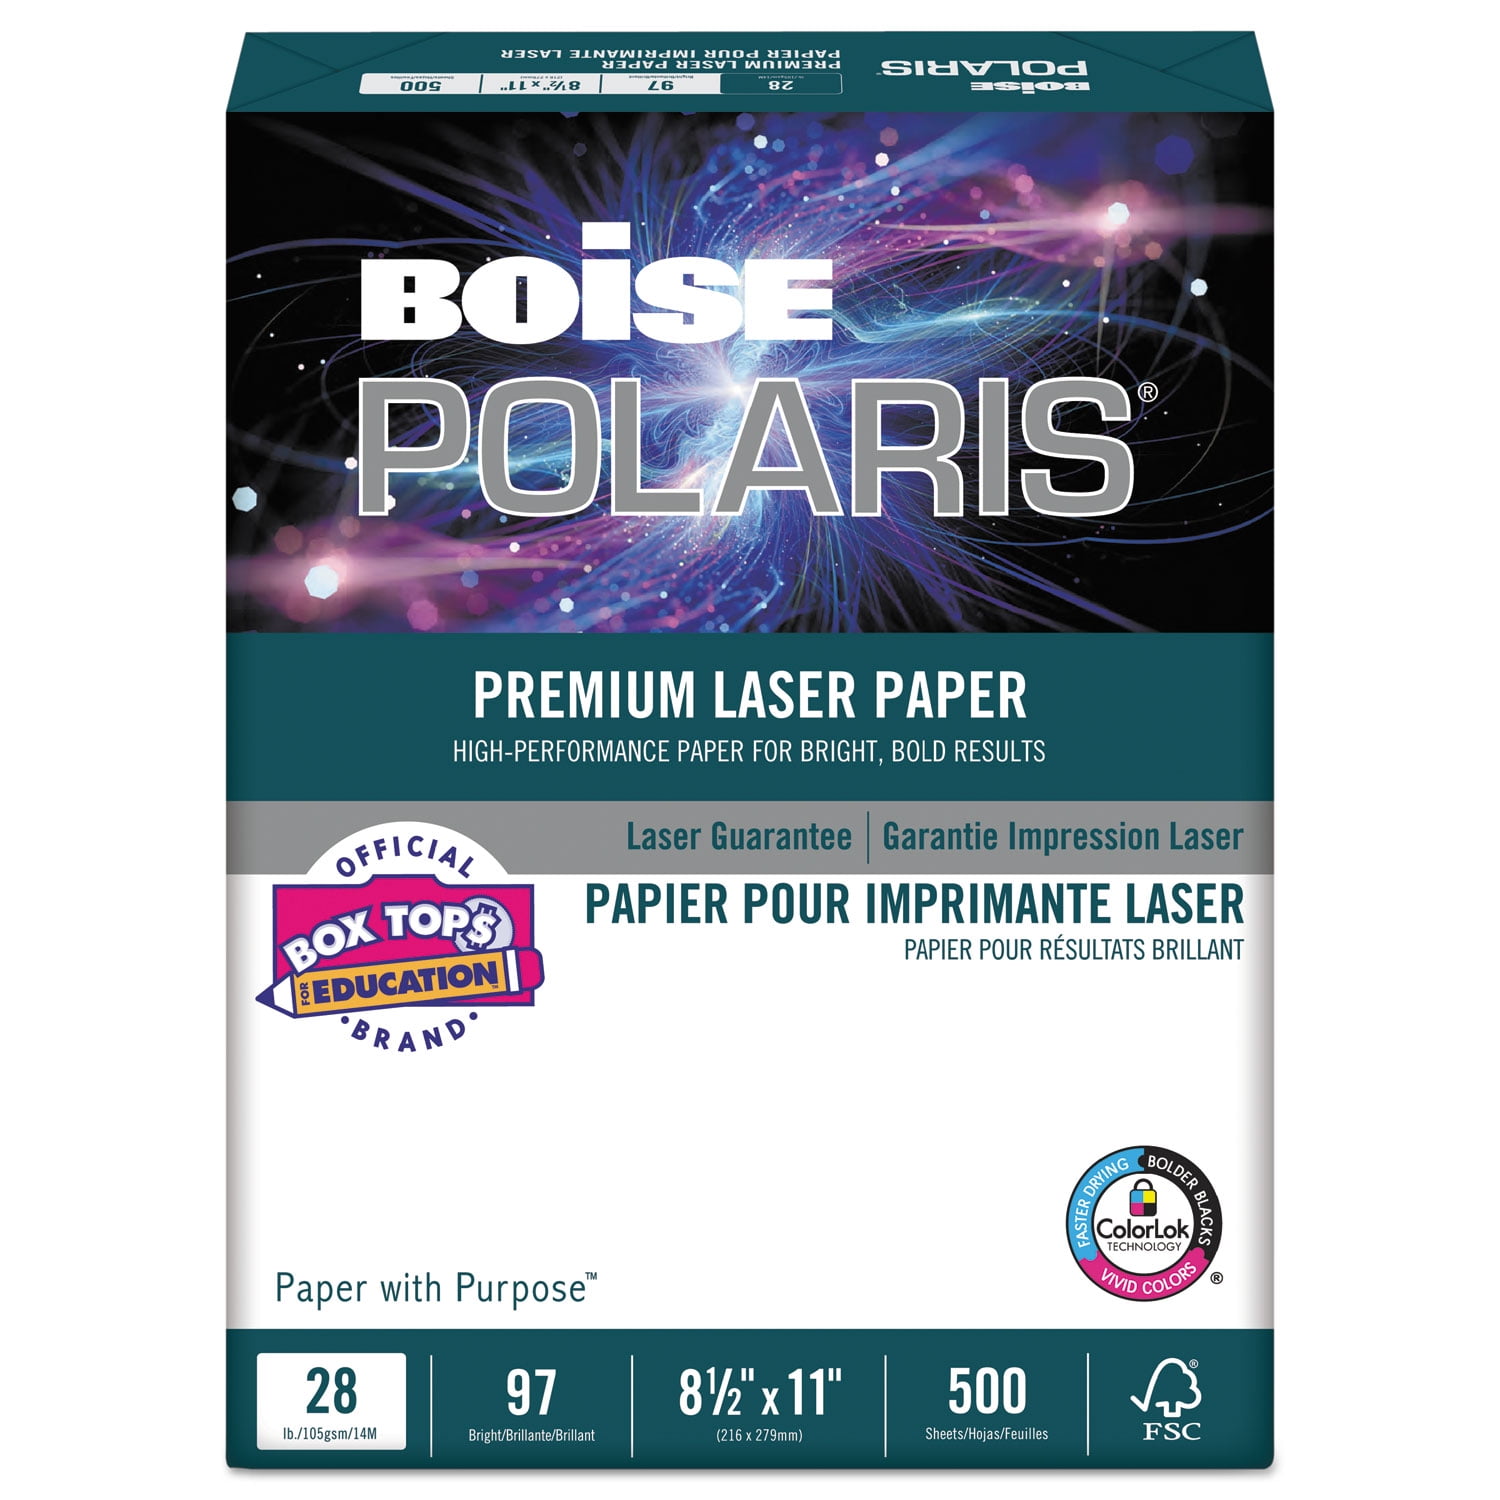 500 Sheets 96 Bright White Boise BPL0117 POLARIS Premium Laser Paper 24lb 11 x 17 